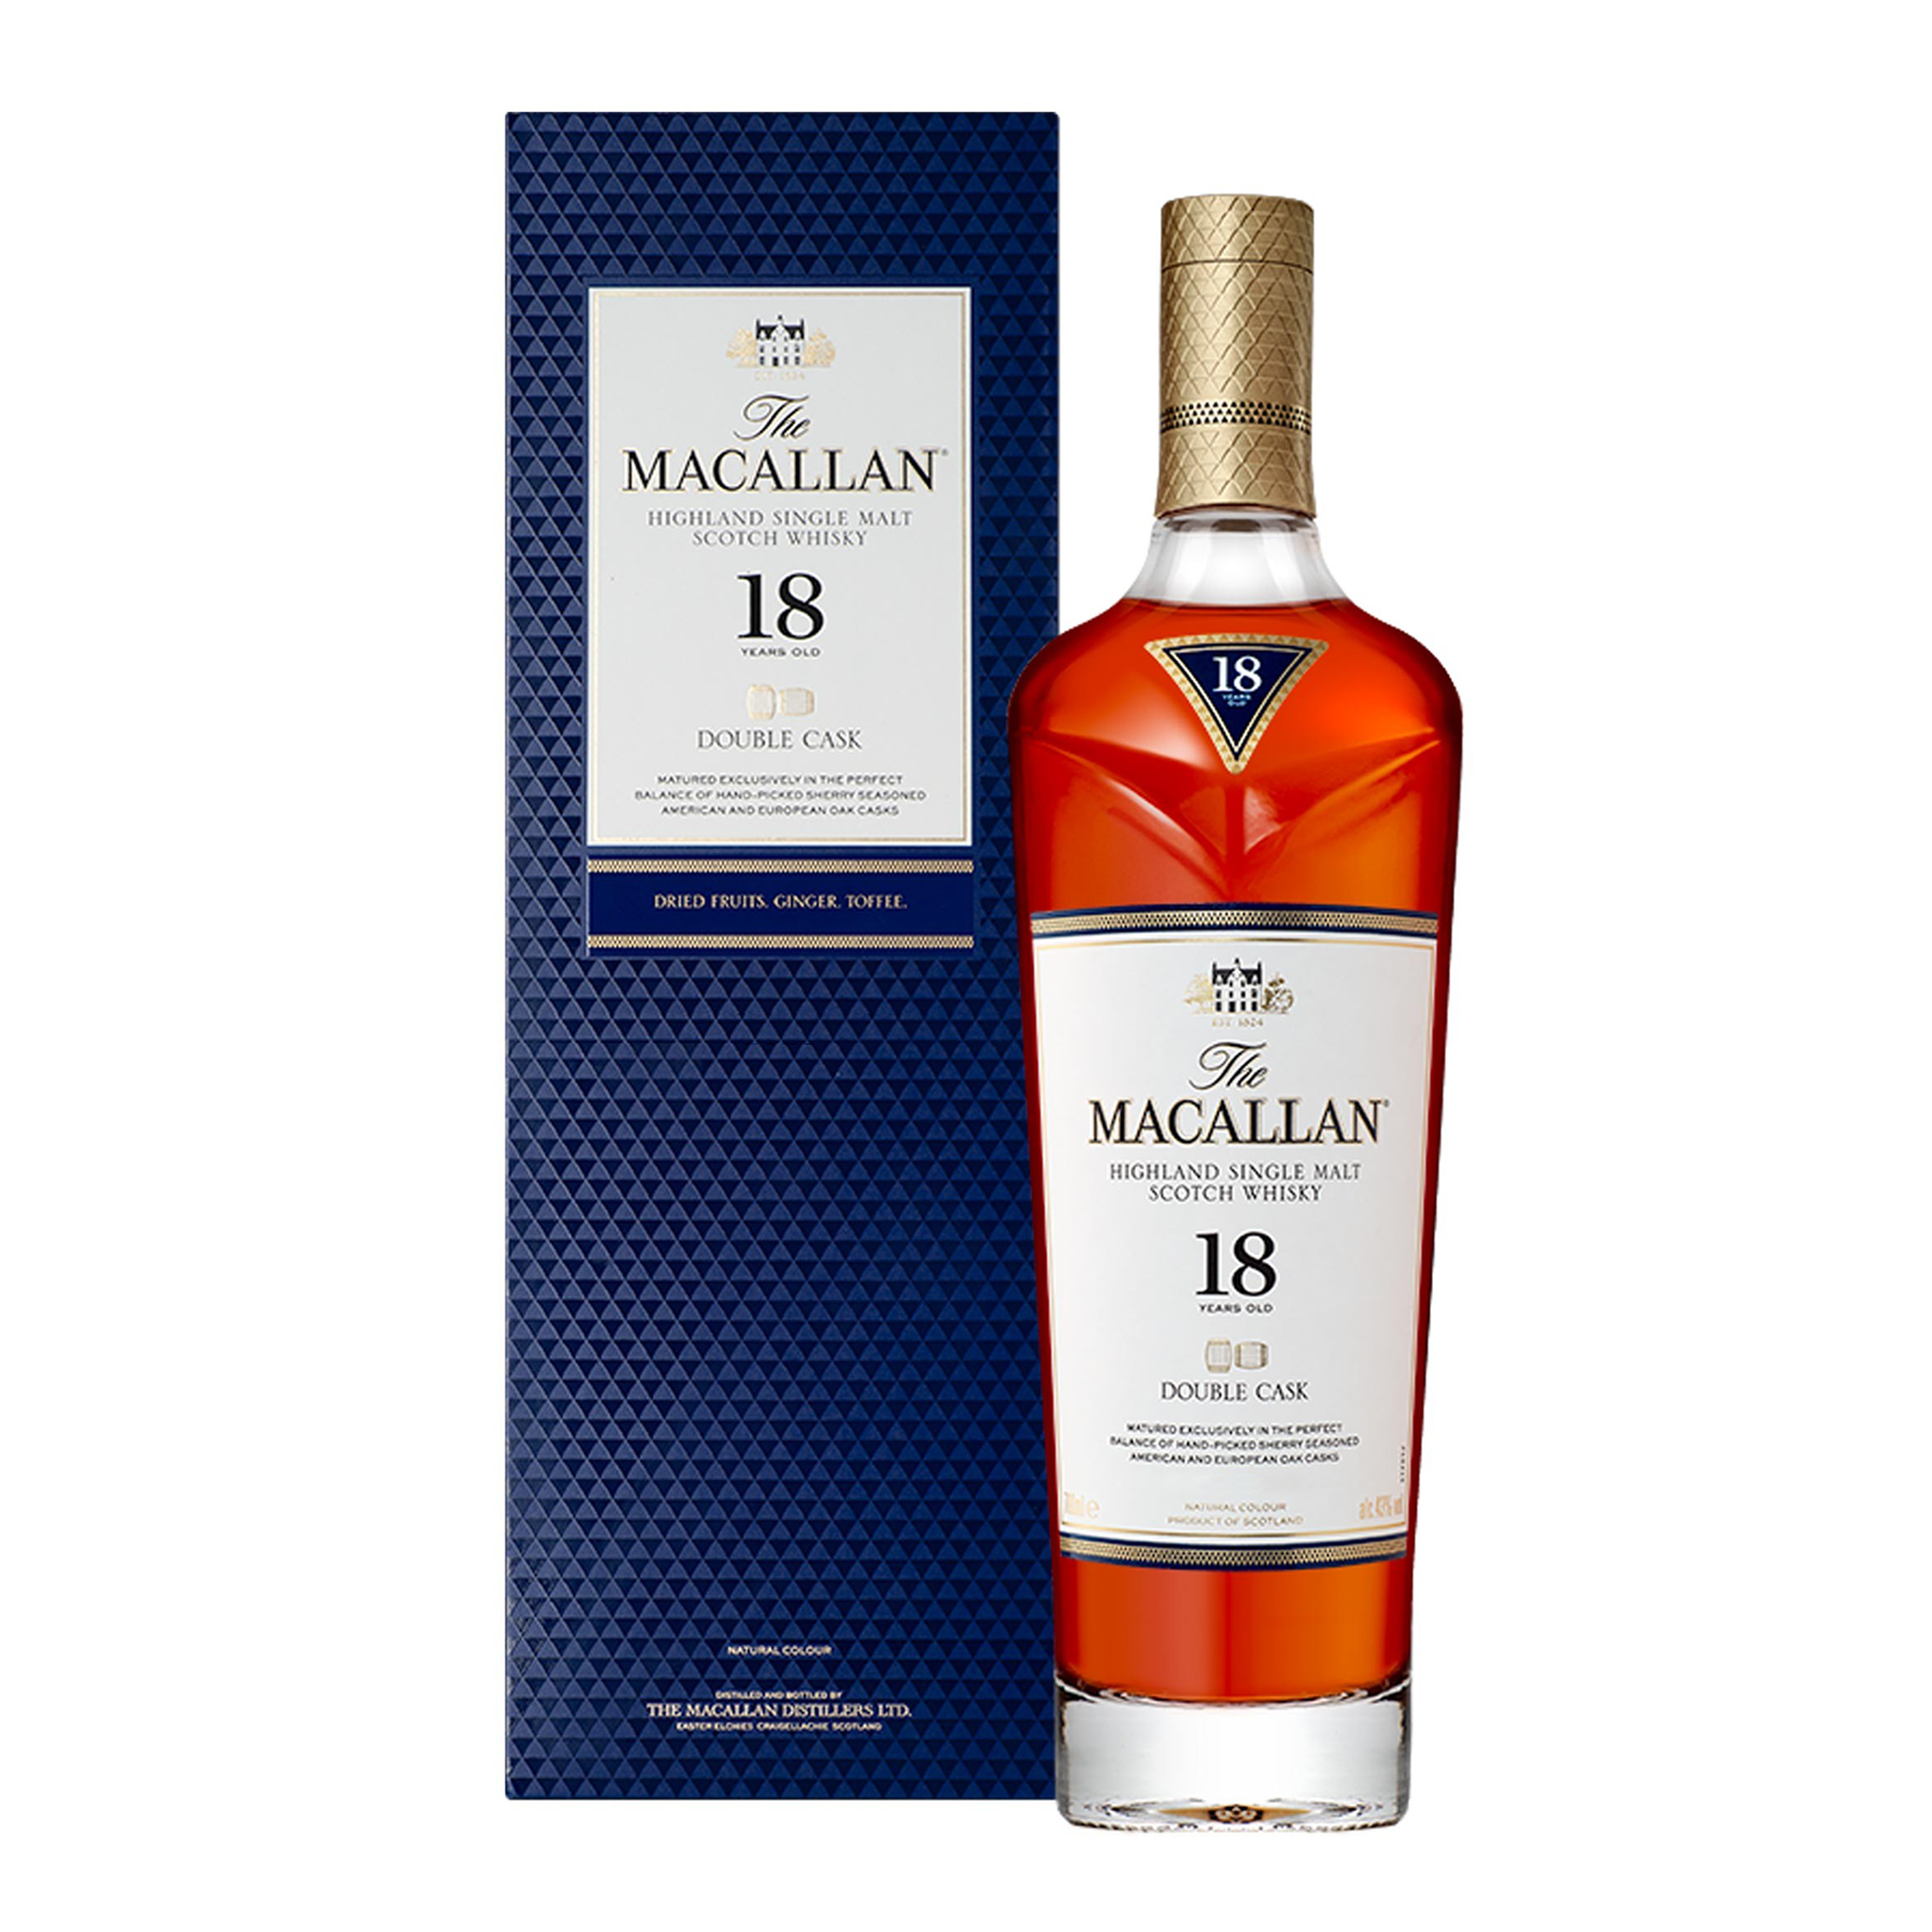 The Macallan Double Cask 18 Year Old Single Malt Scotch Whisky 700ml (2021 Release) - Kent Street Cellars